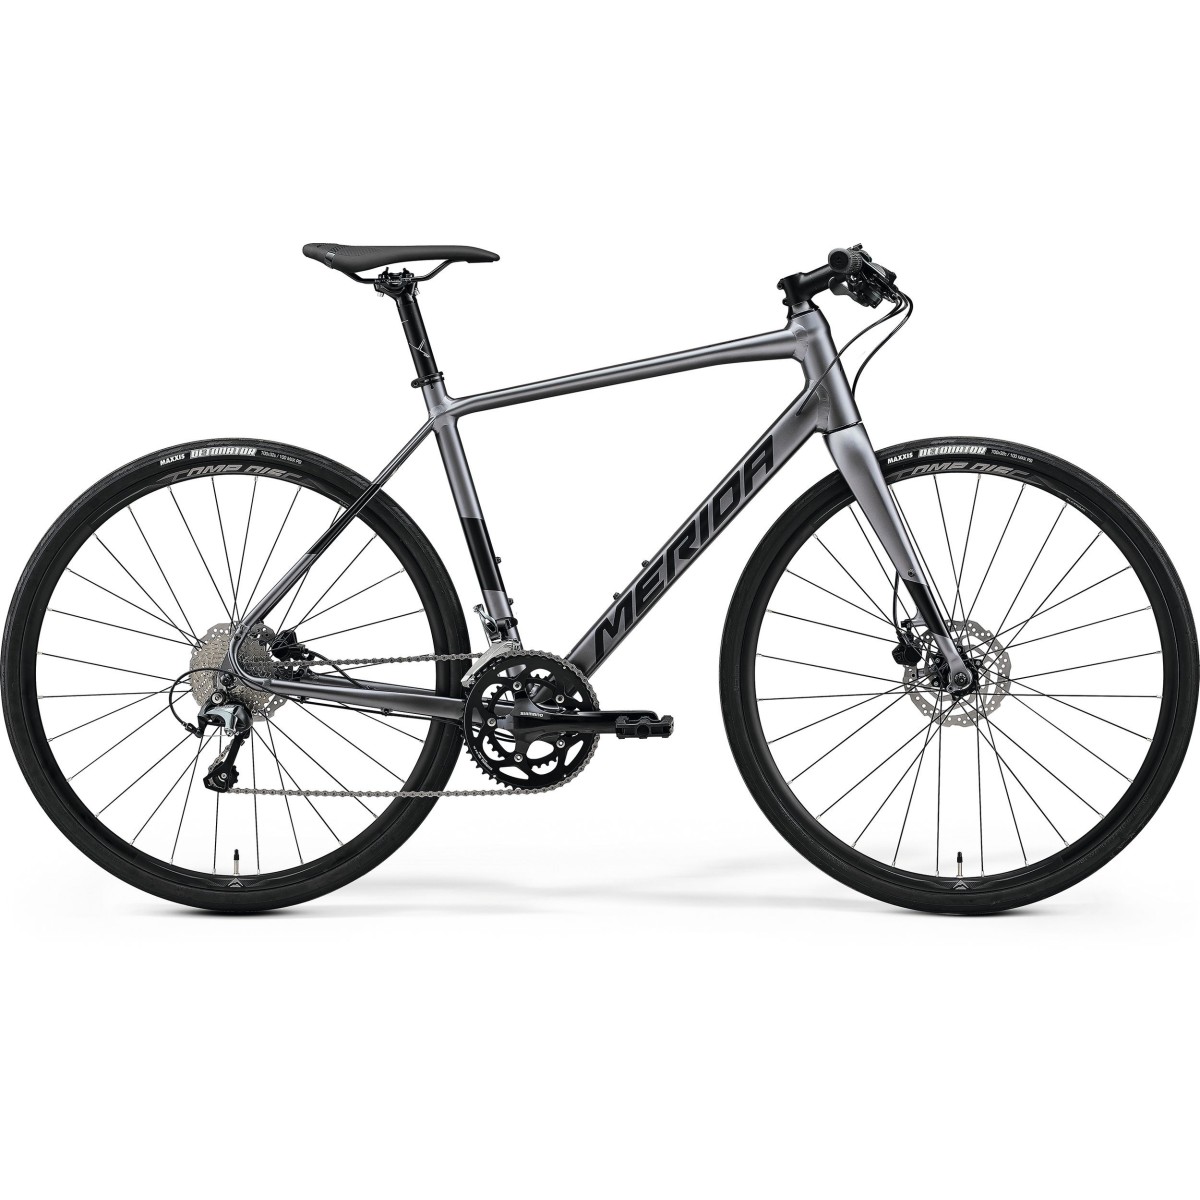 MERIDA SPEEDER 300 fitness bicycle - grey